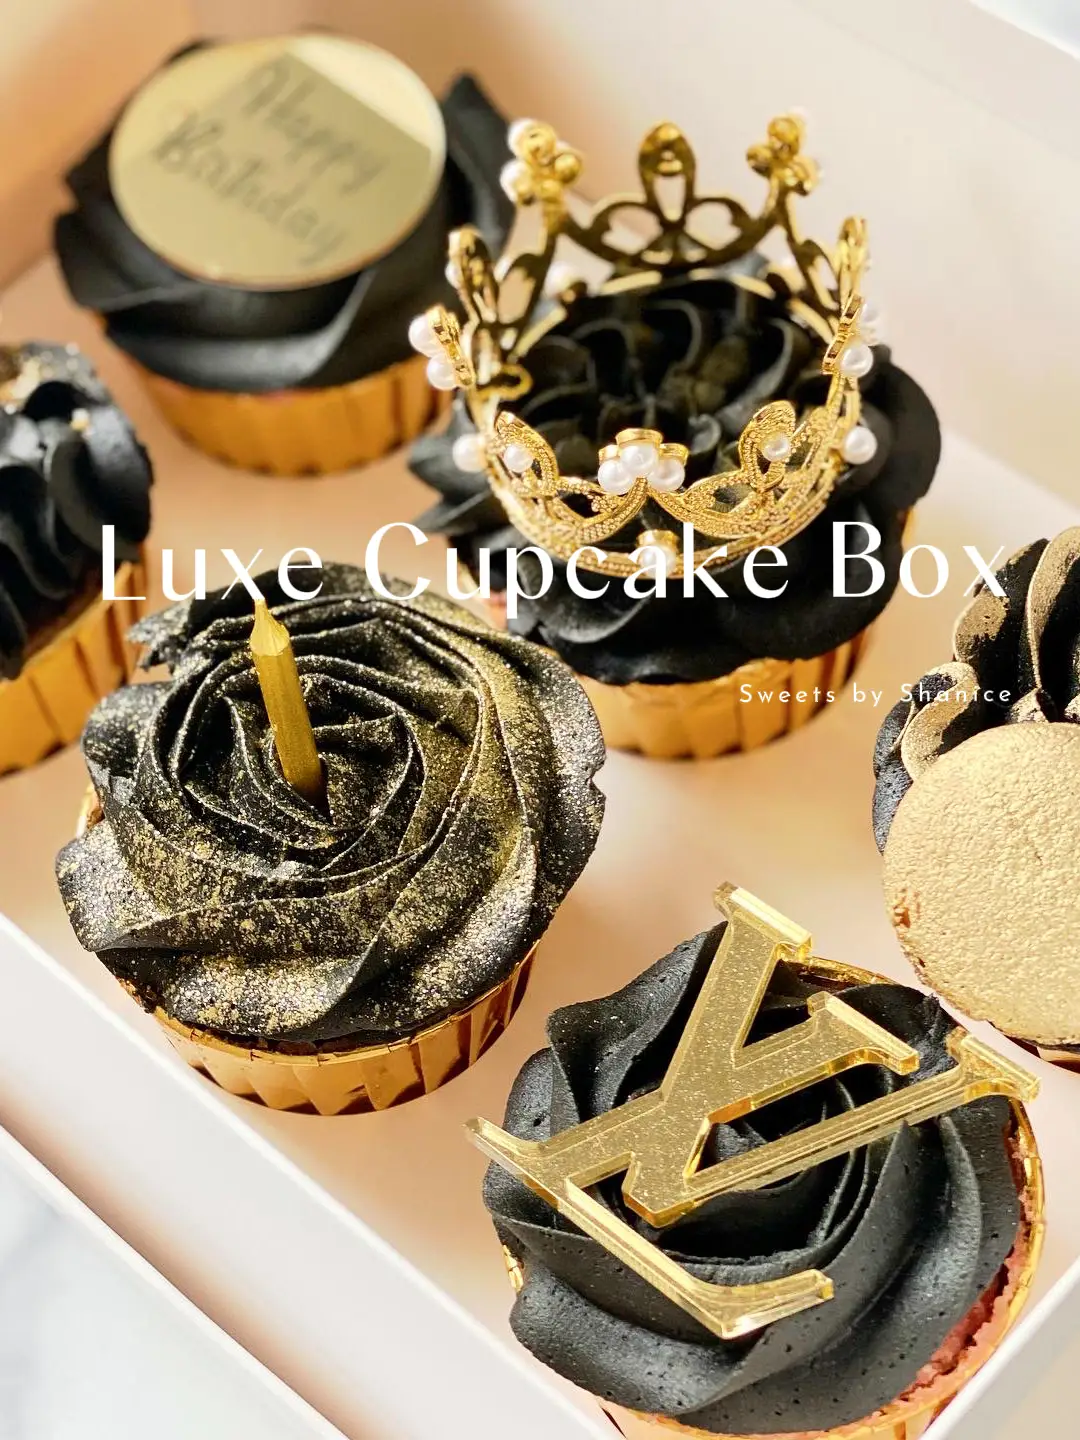 Louis Vuitton cupcakes to fulfill - The Dessert Studio